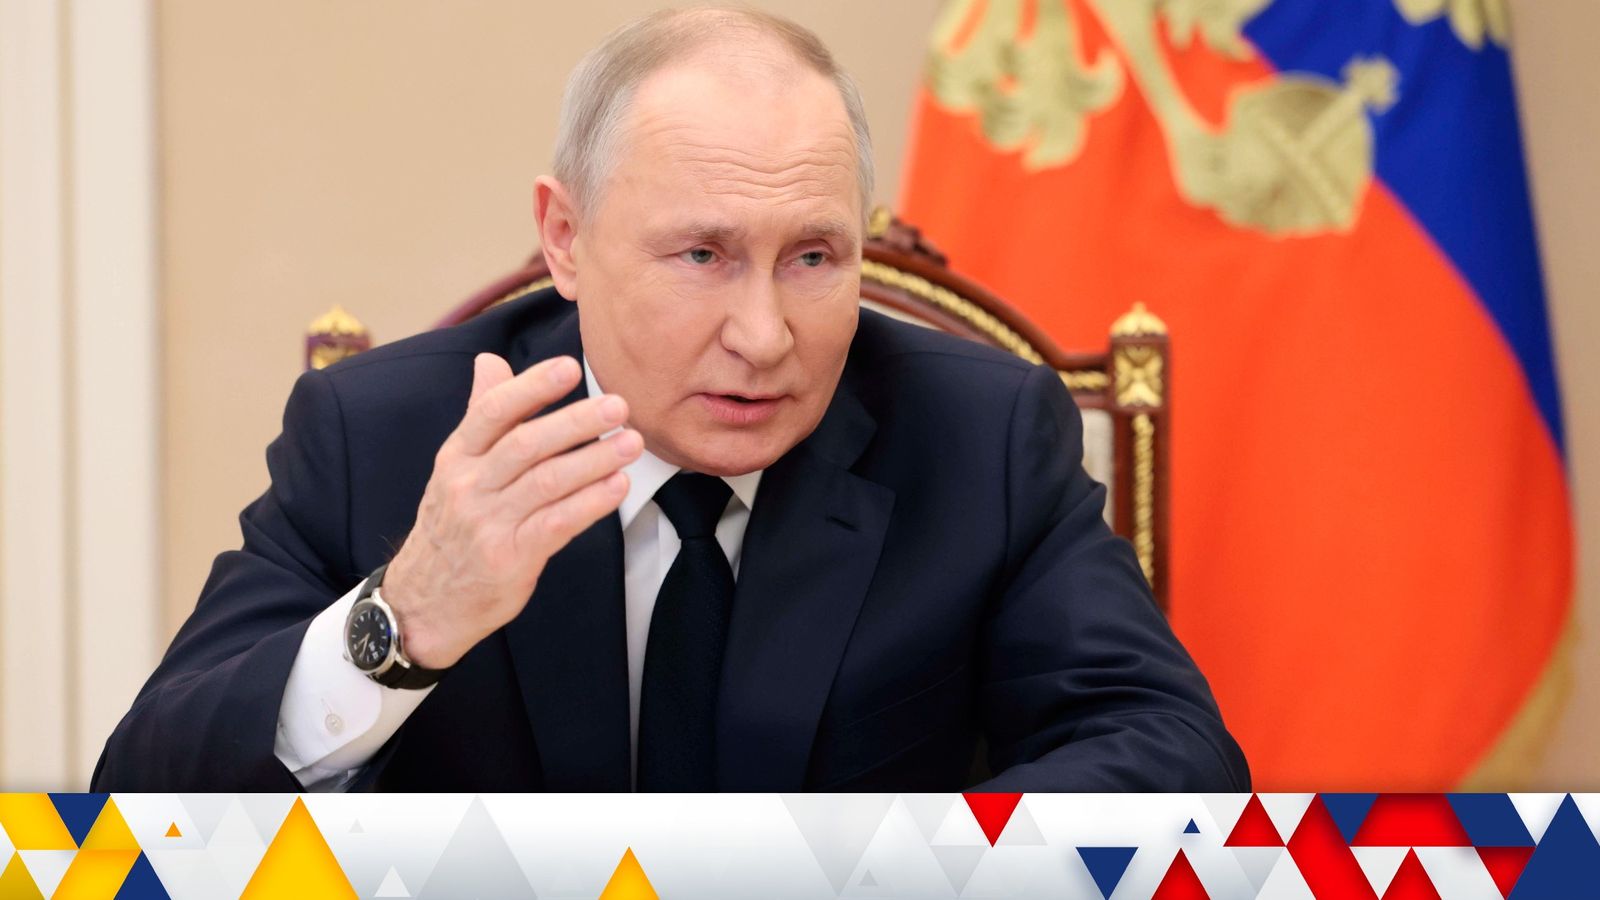 Vladimir Putin arrest warrant: Russian leader wanted by International Criminal Court over alleged war crimes in Ukraine